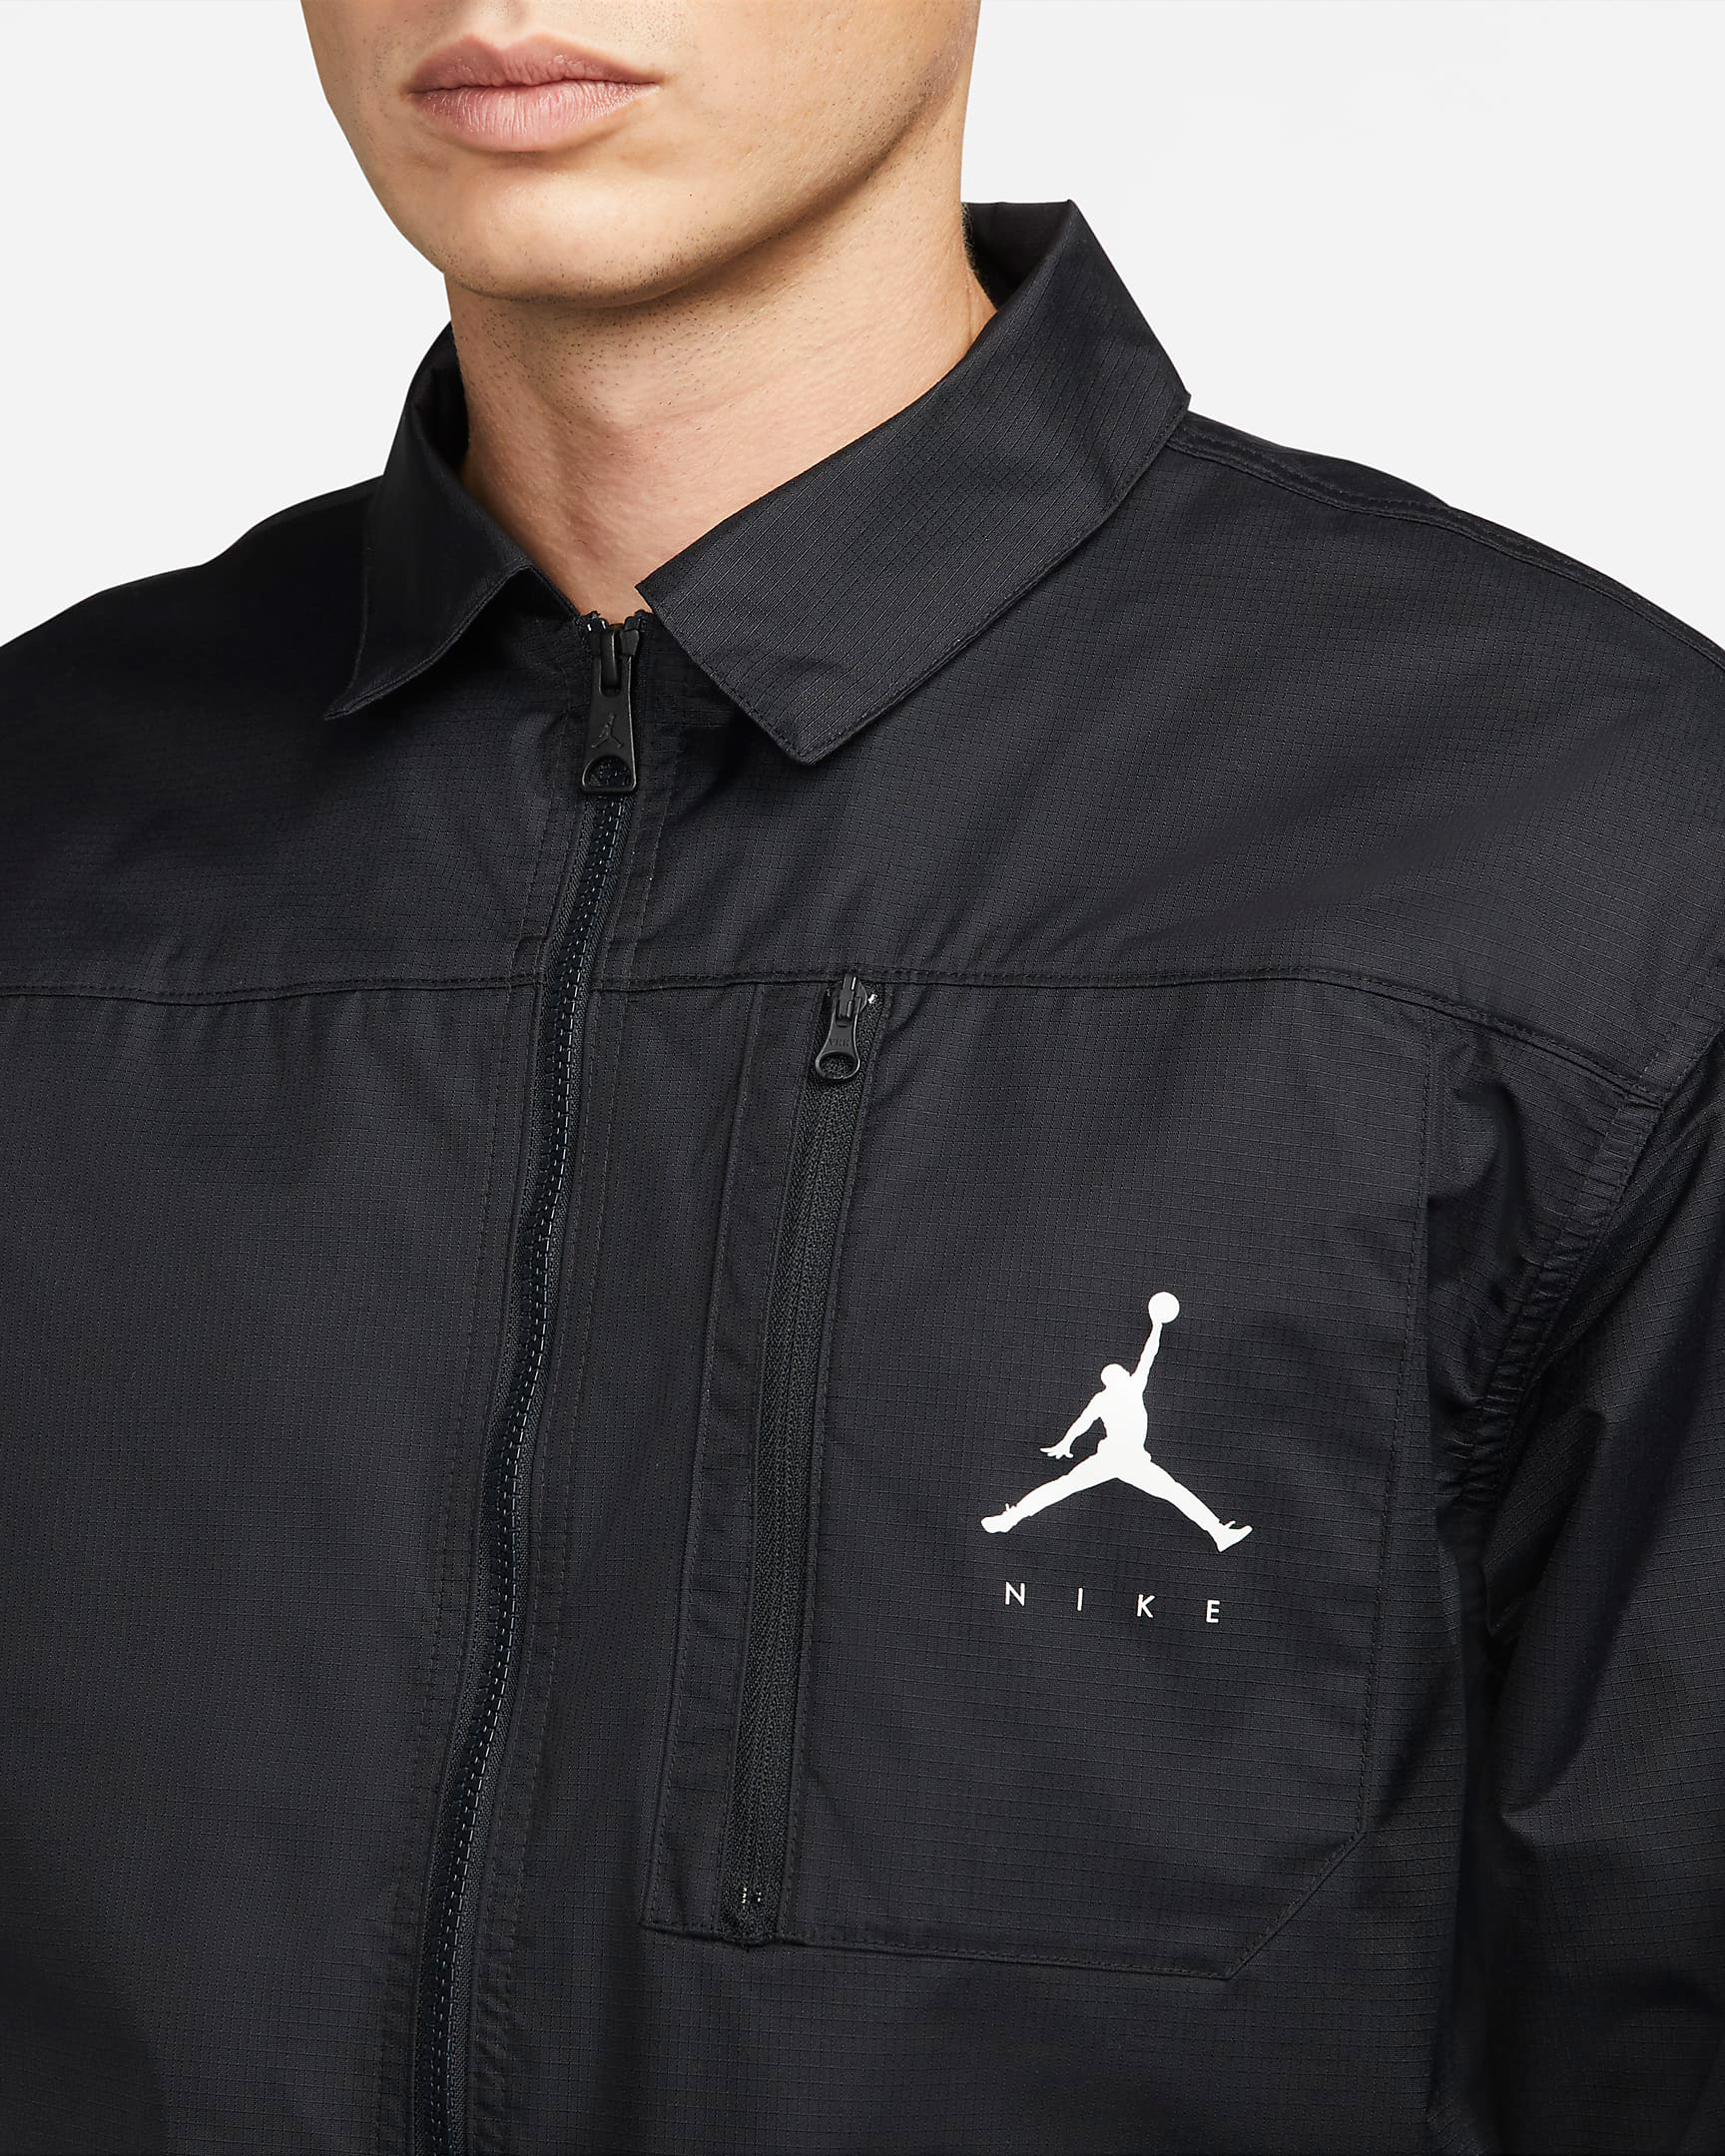 jordan-jumpman-jacket-black-white-3